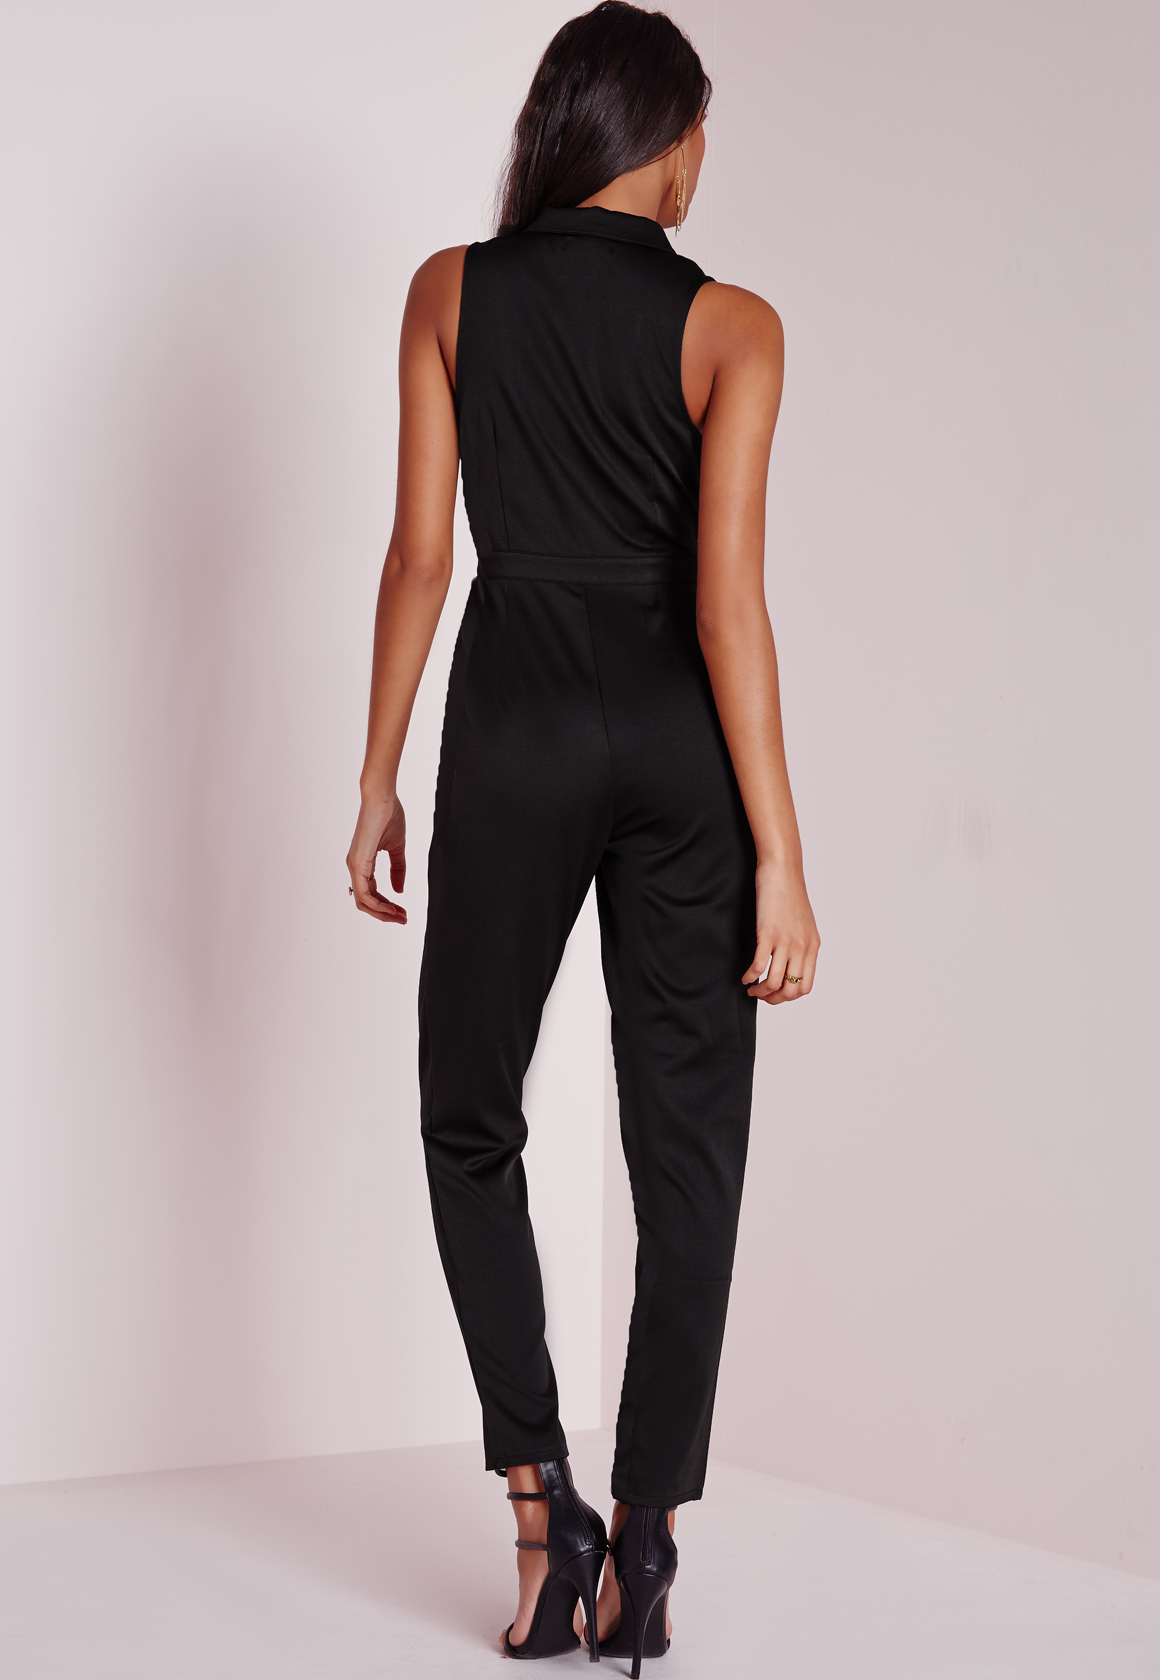 Lyst - Missguided Satin Tux Sleeveless Jumpsuit Black in Black